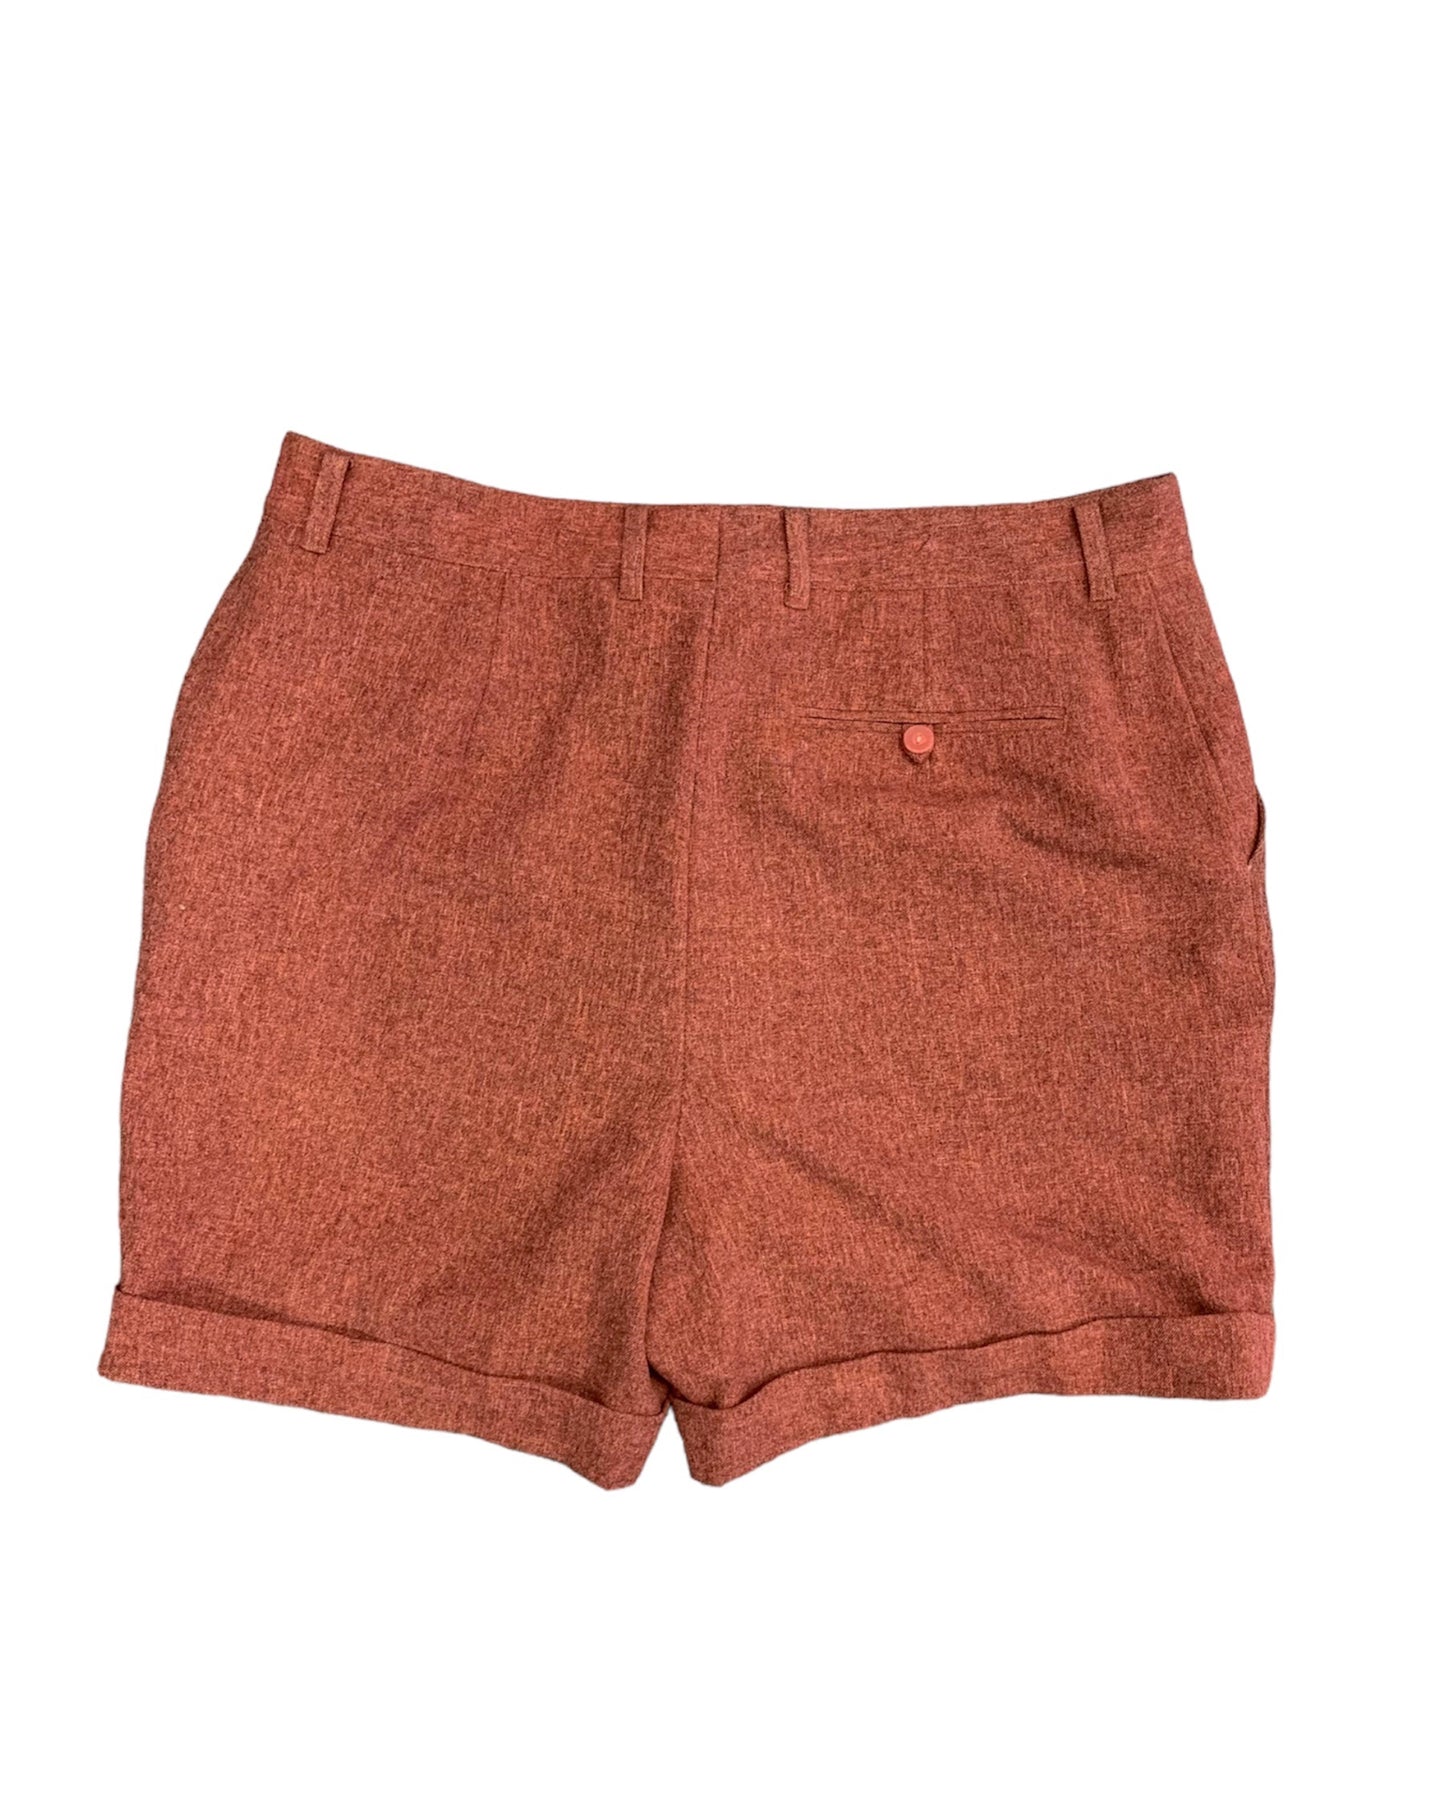 Vintage terracotta shorts